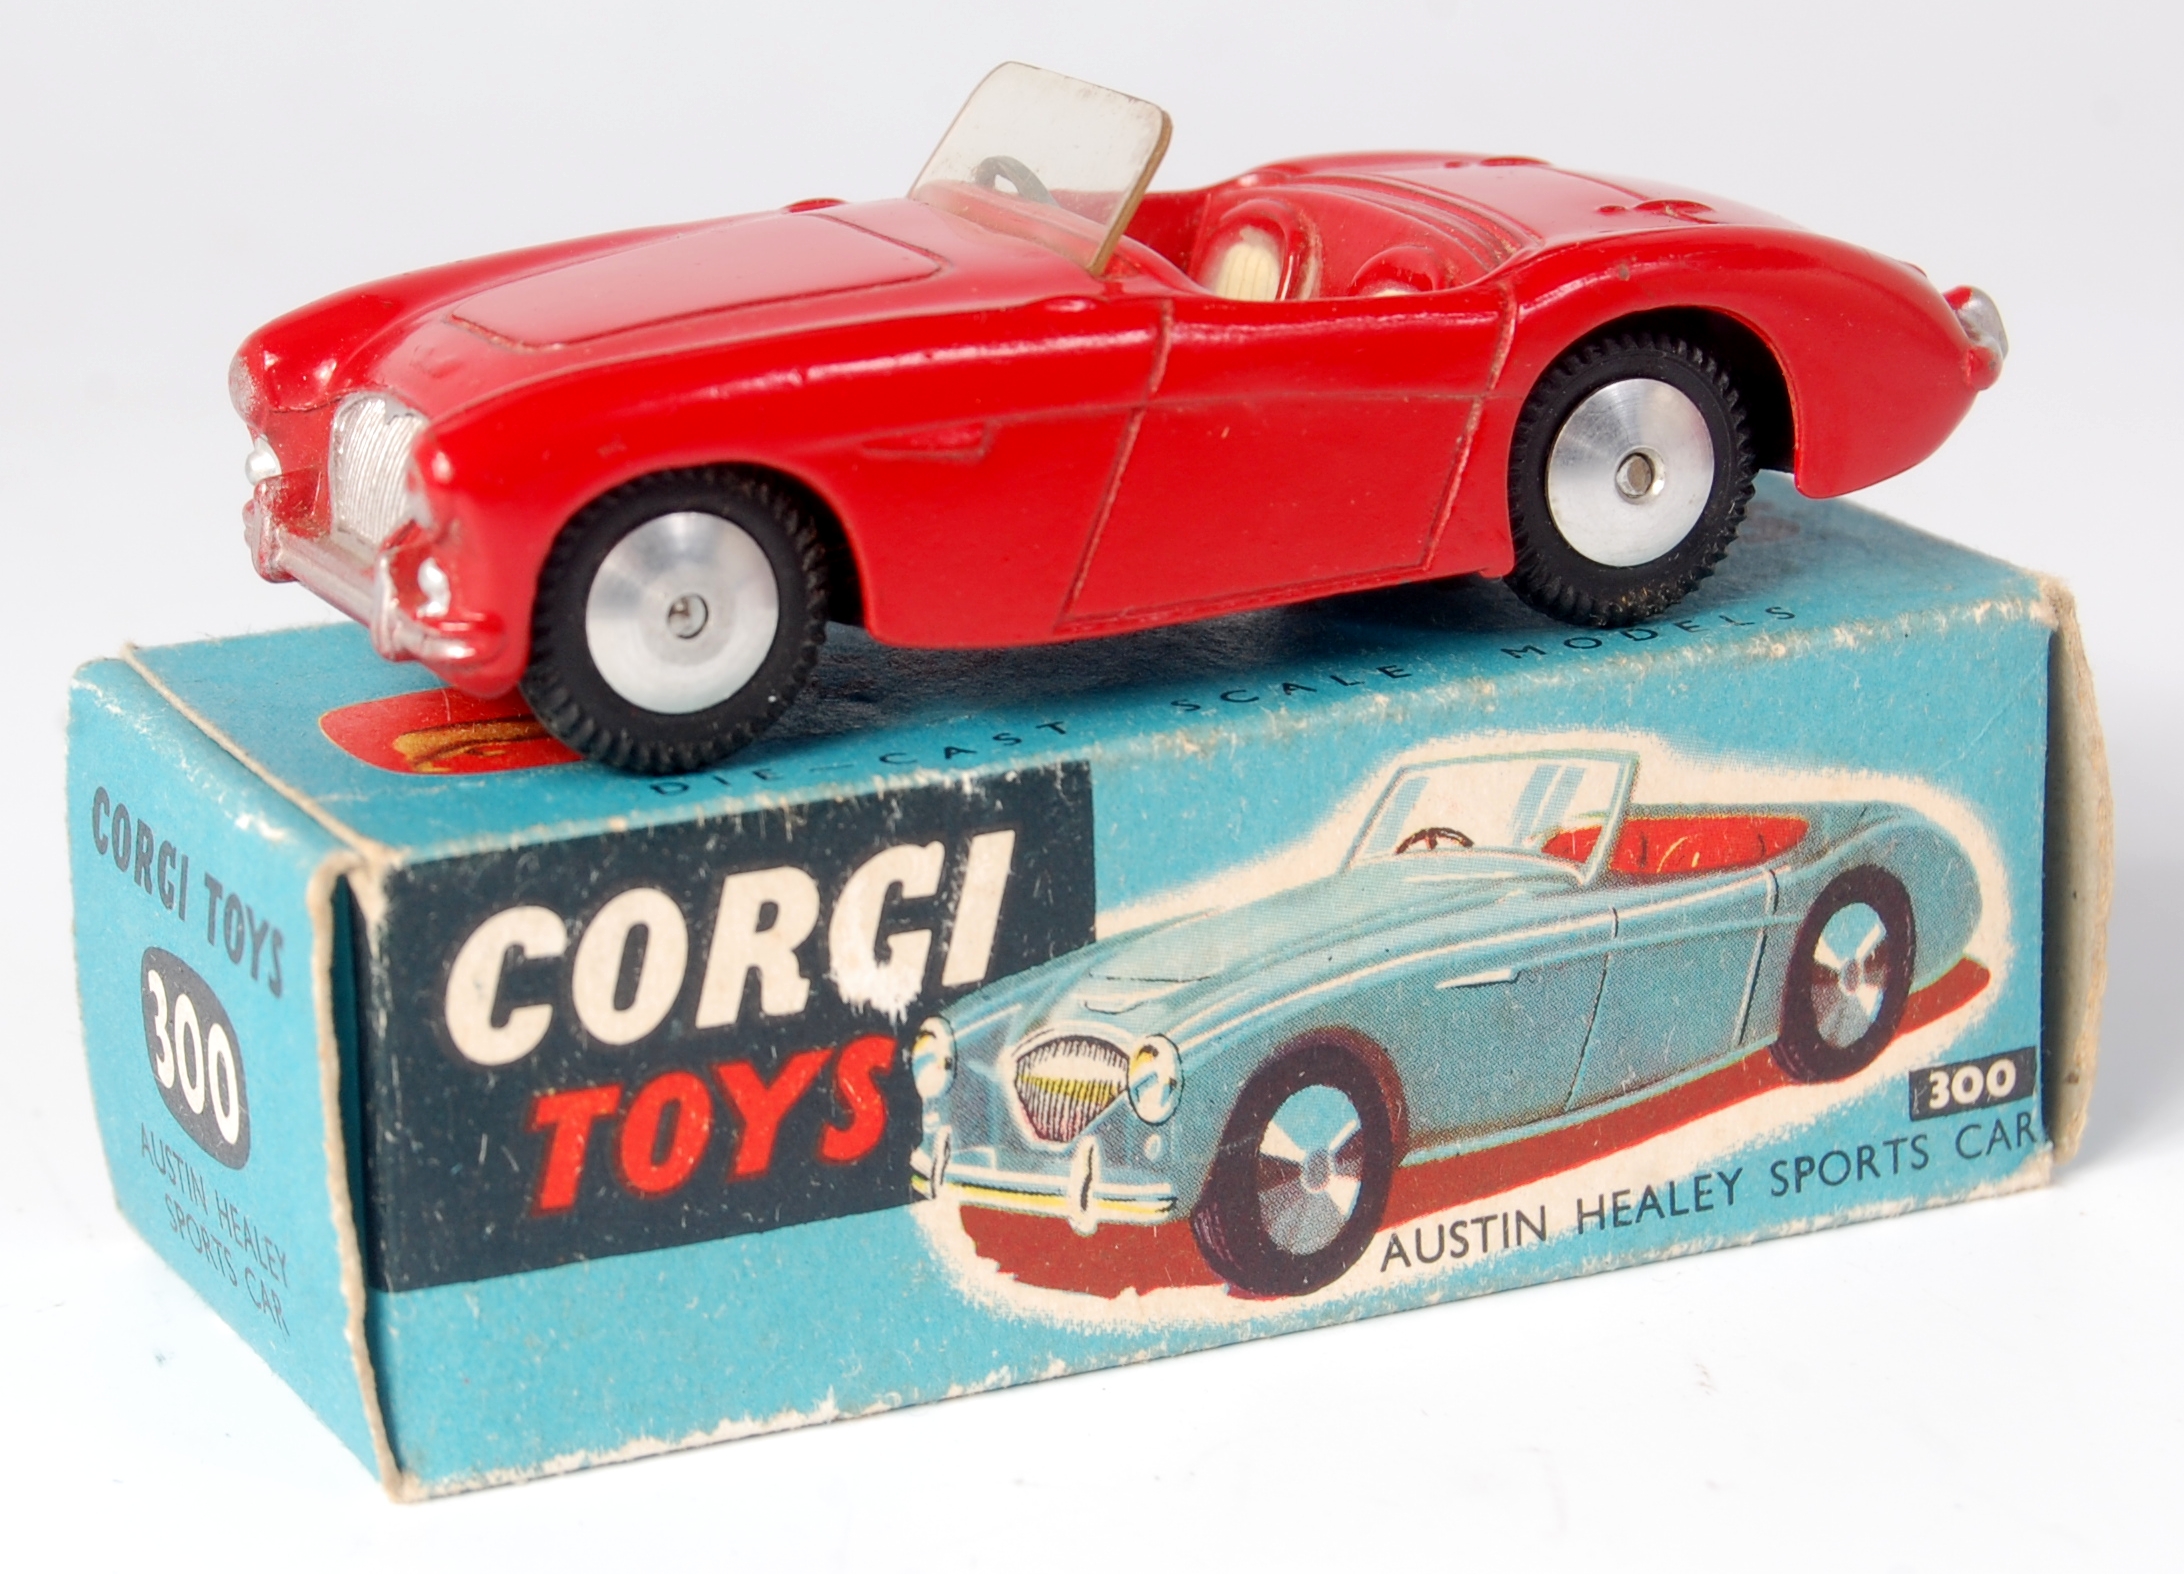 Corgi Toys, 300 Austin Healey sports car, red body with cream seats, flat spun hubs, in the